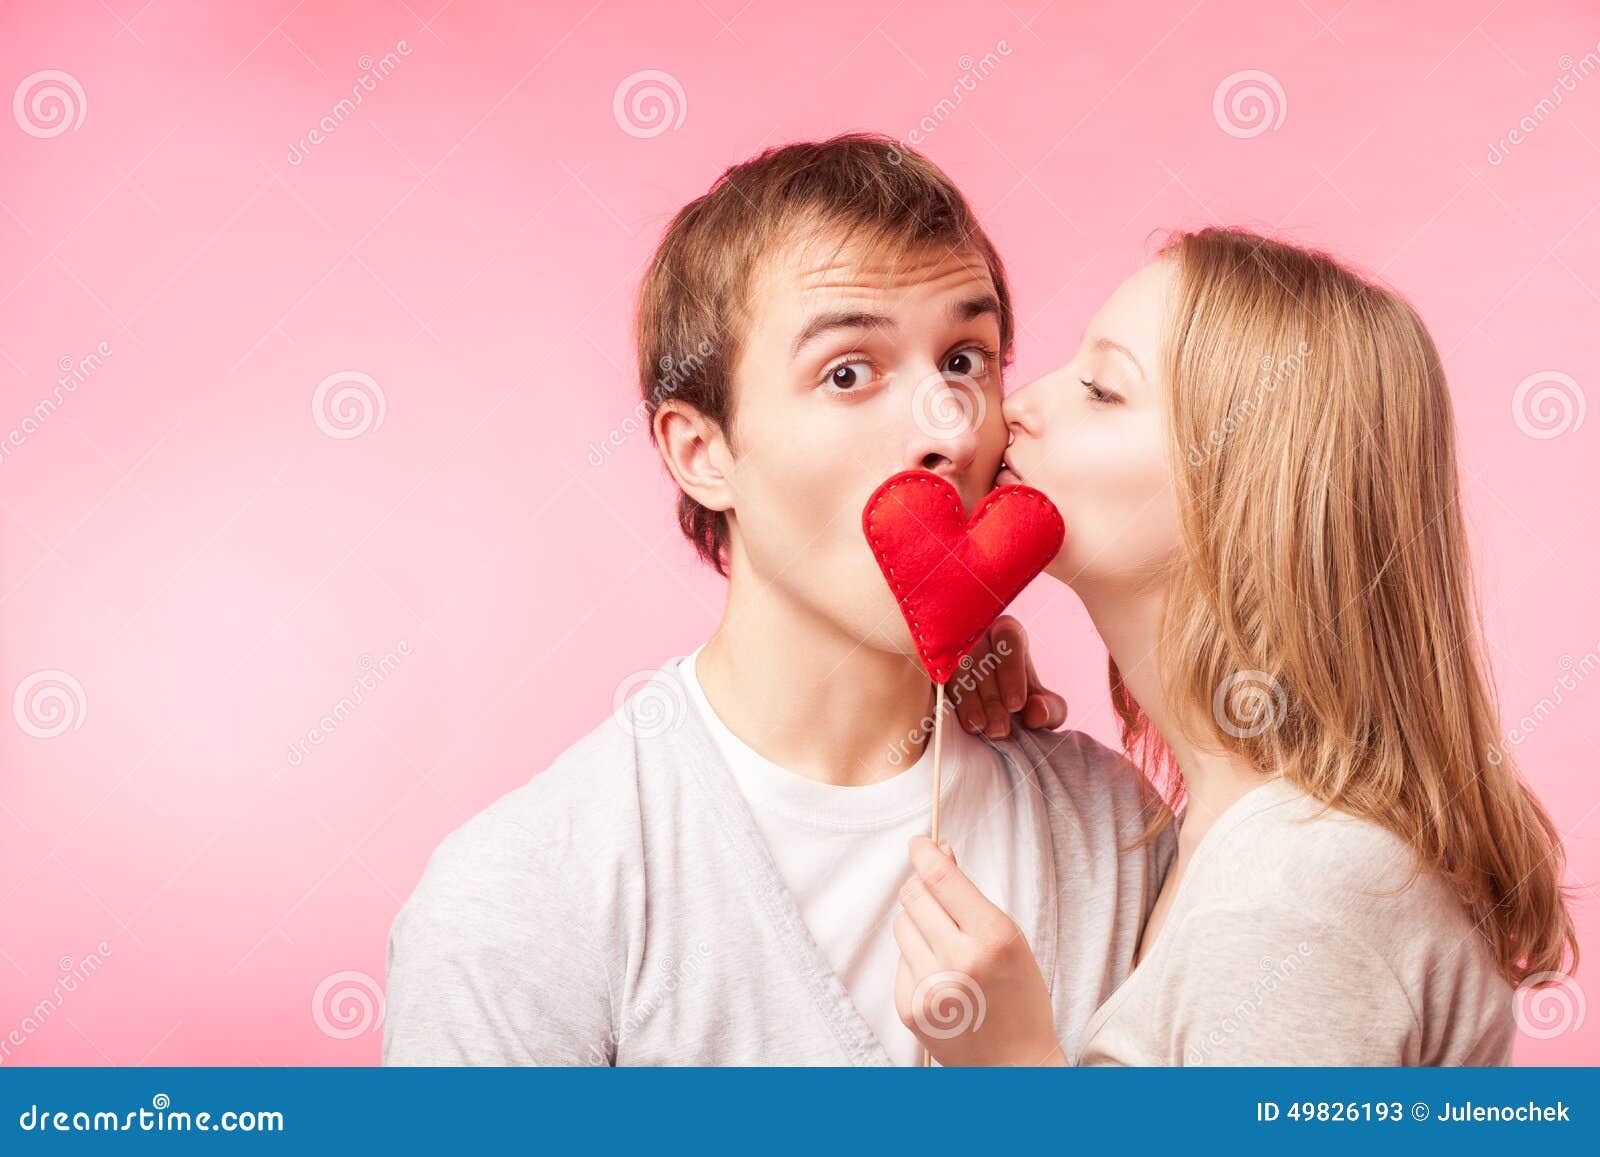 Boys kiss girls. Девушка целует. Поцелуй мальчика и девочки. Мальчик целует девочку с ягодами. Ды едевочки целуют мальчика.